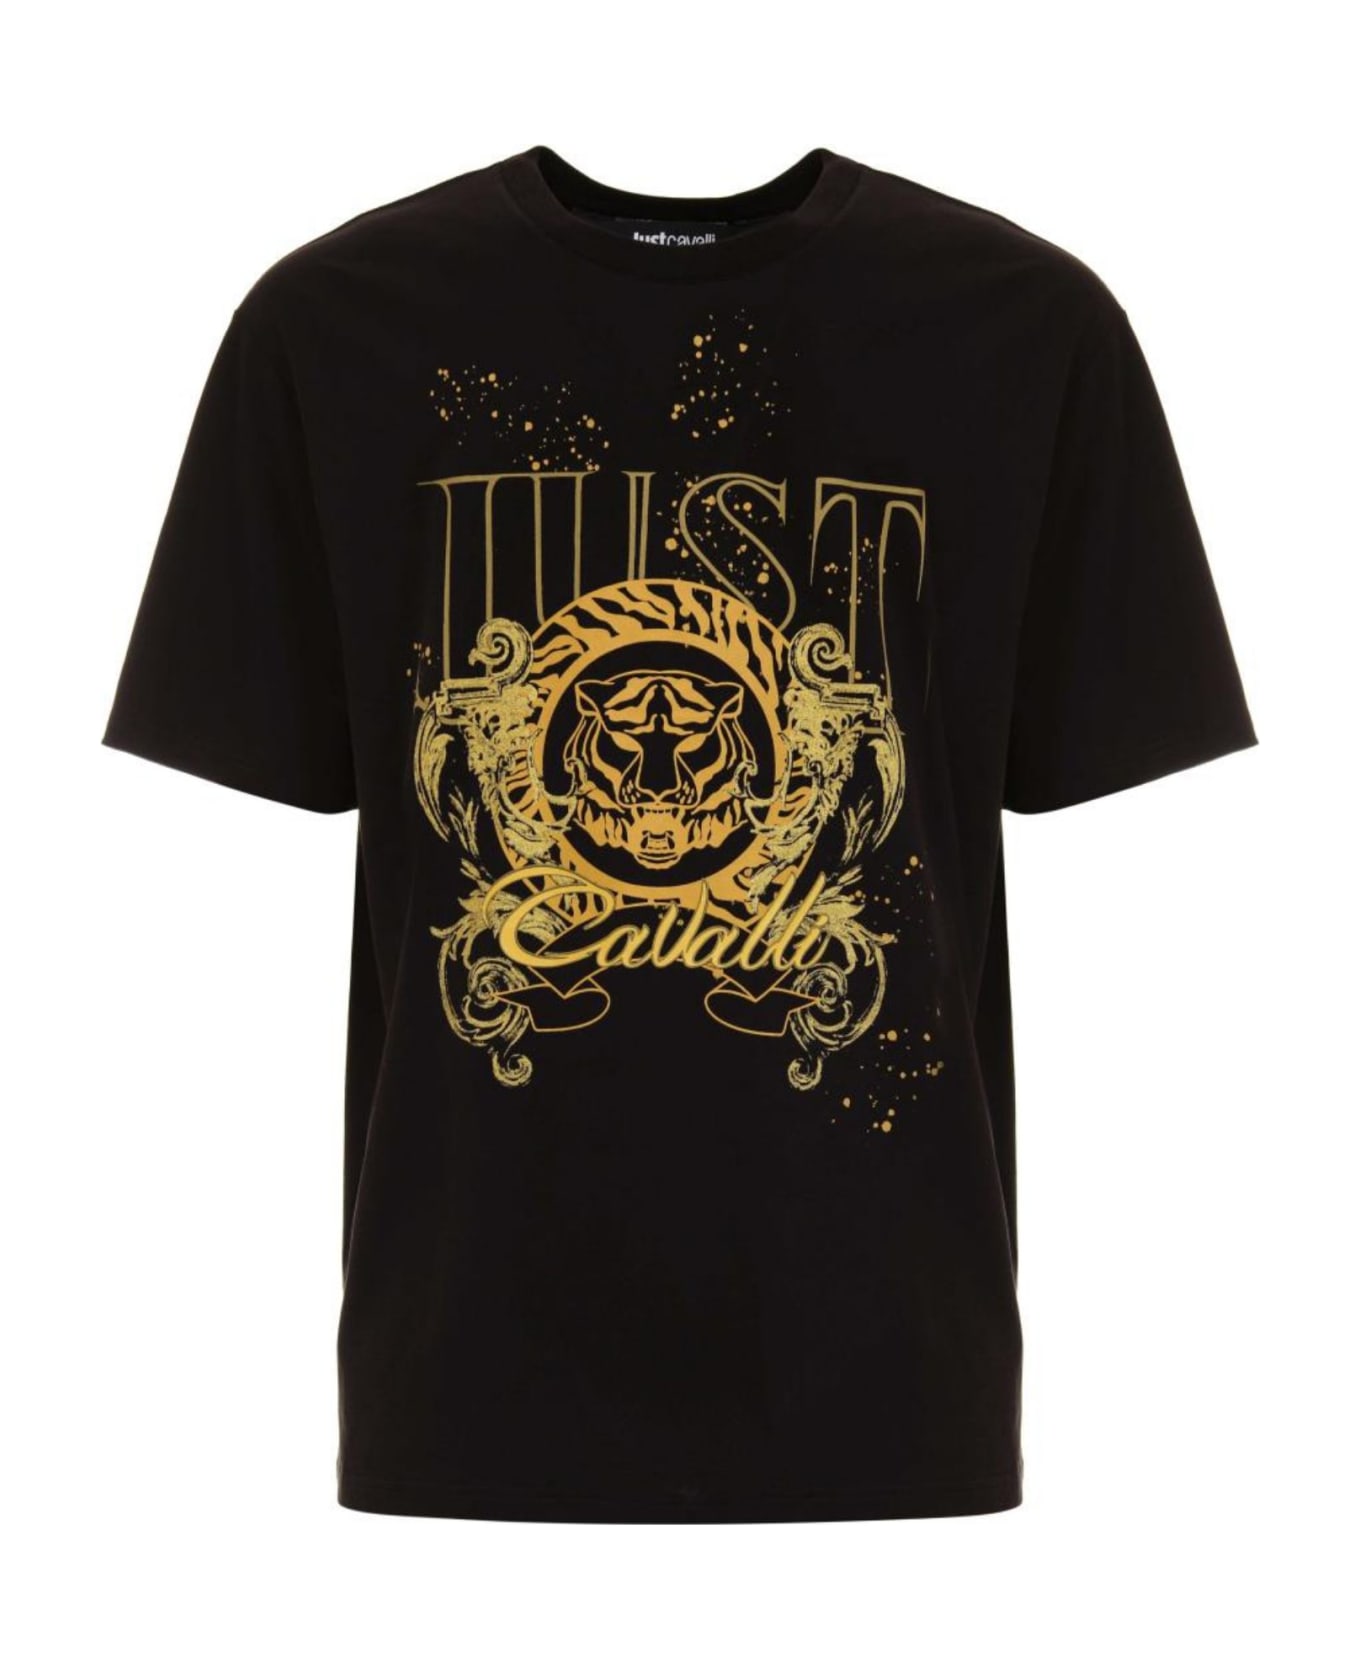 Just Cavalli Men's T-shirt. - Black